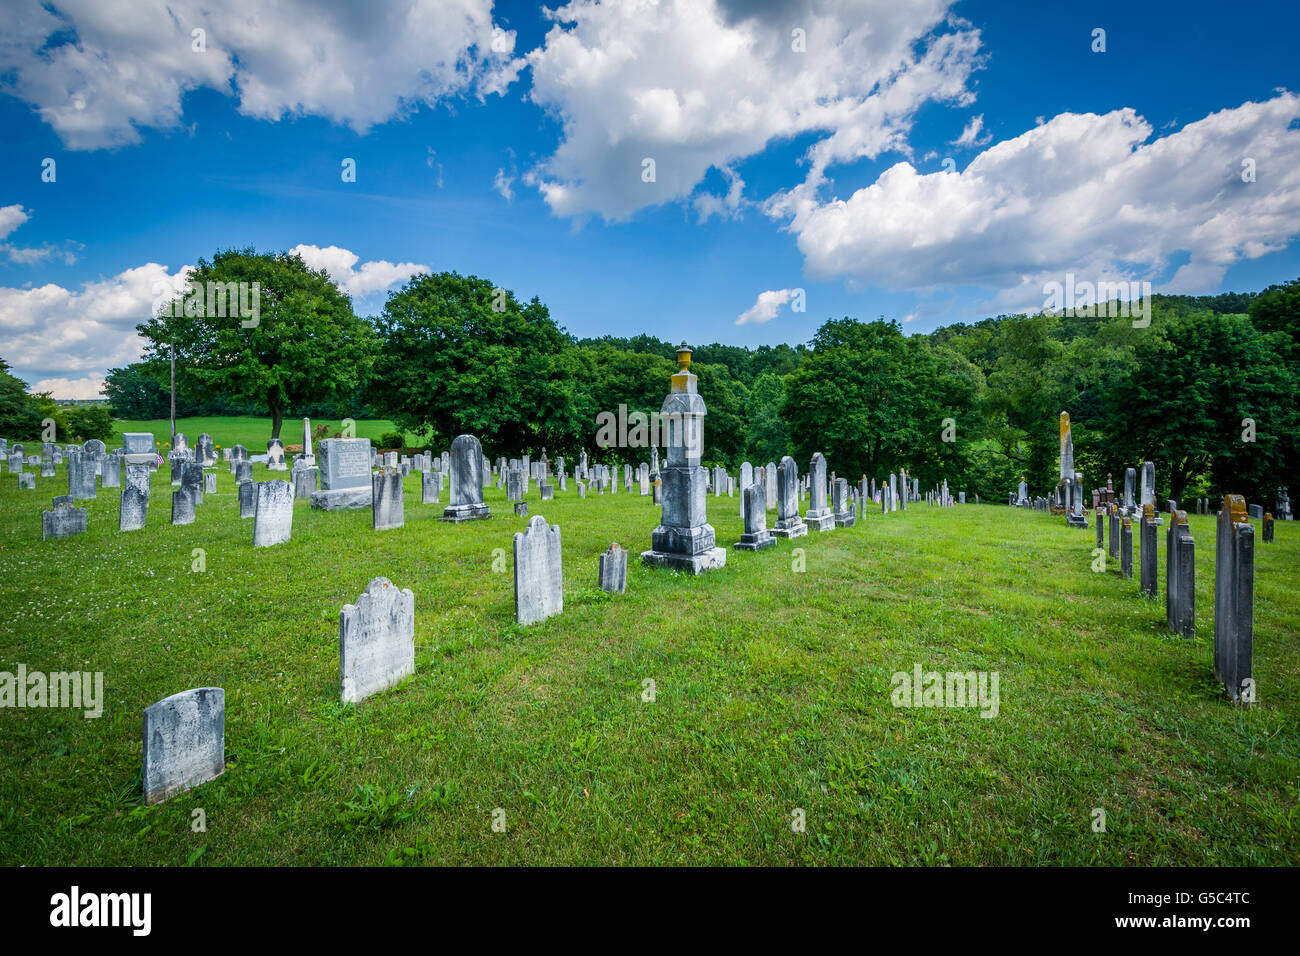 Cemetery near Glenville, Pennsylvania. Stock Photo